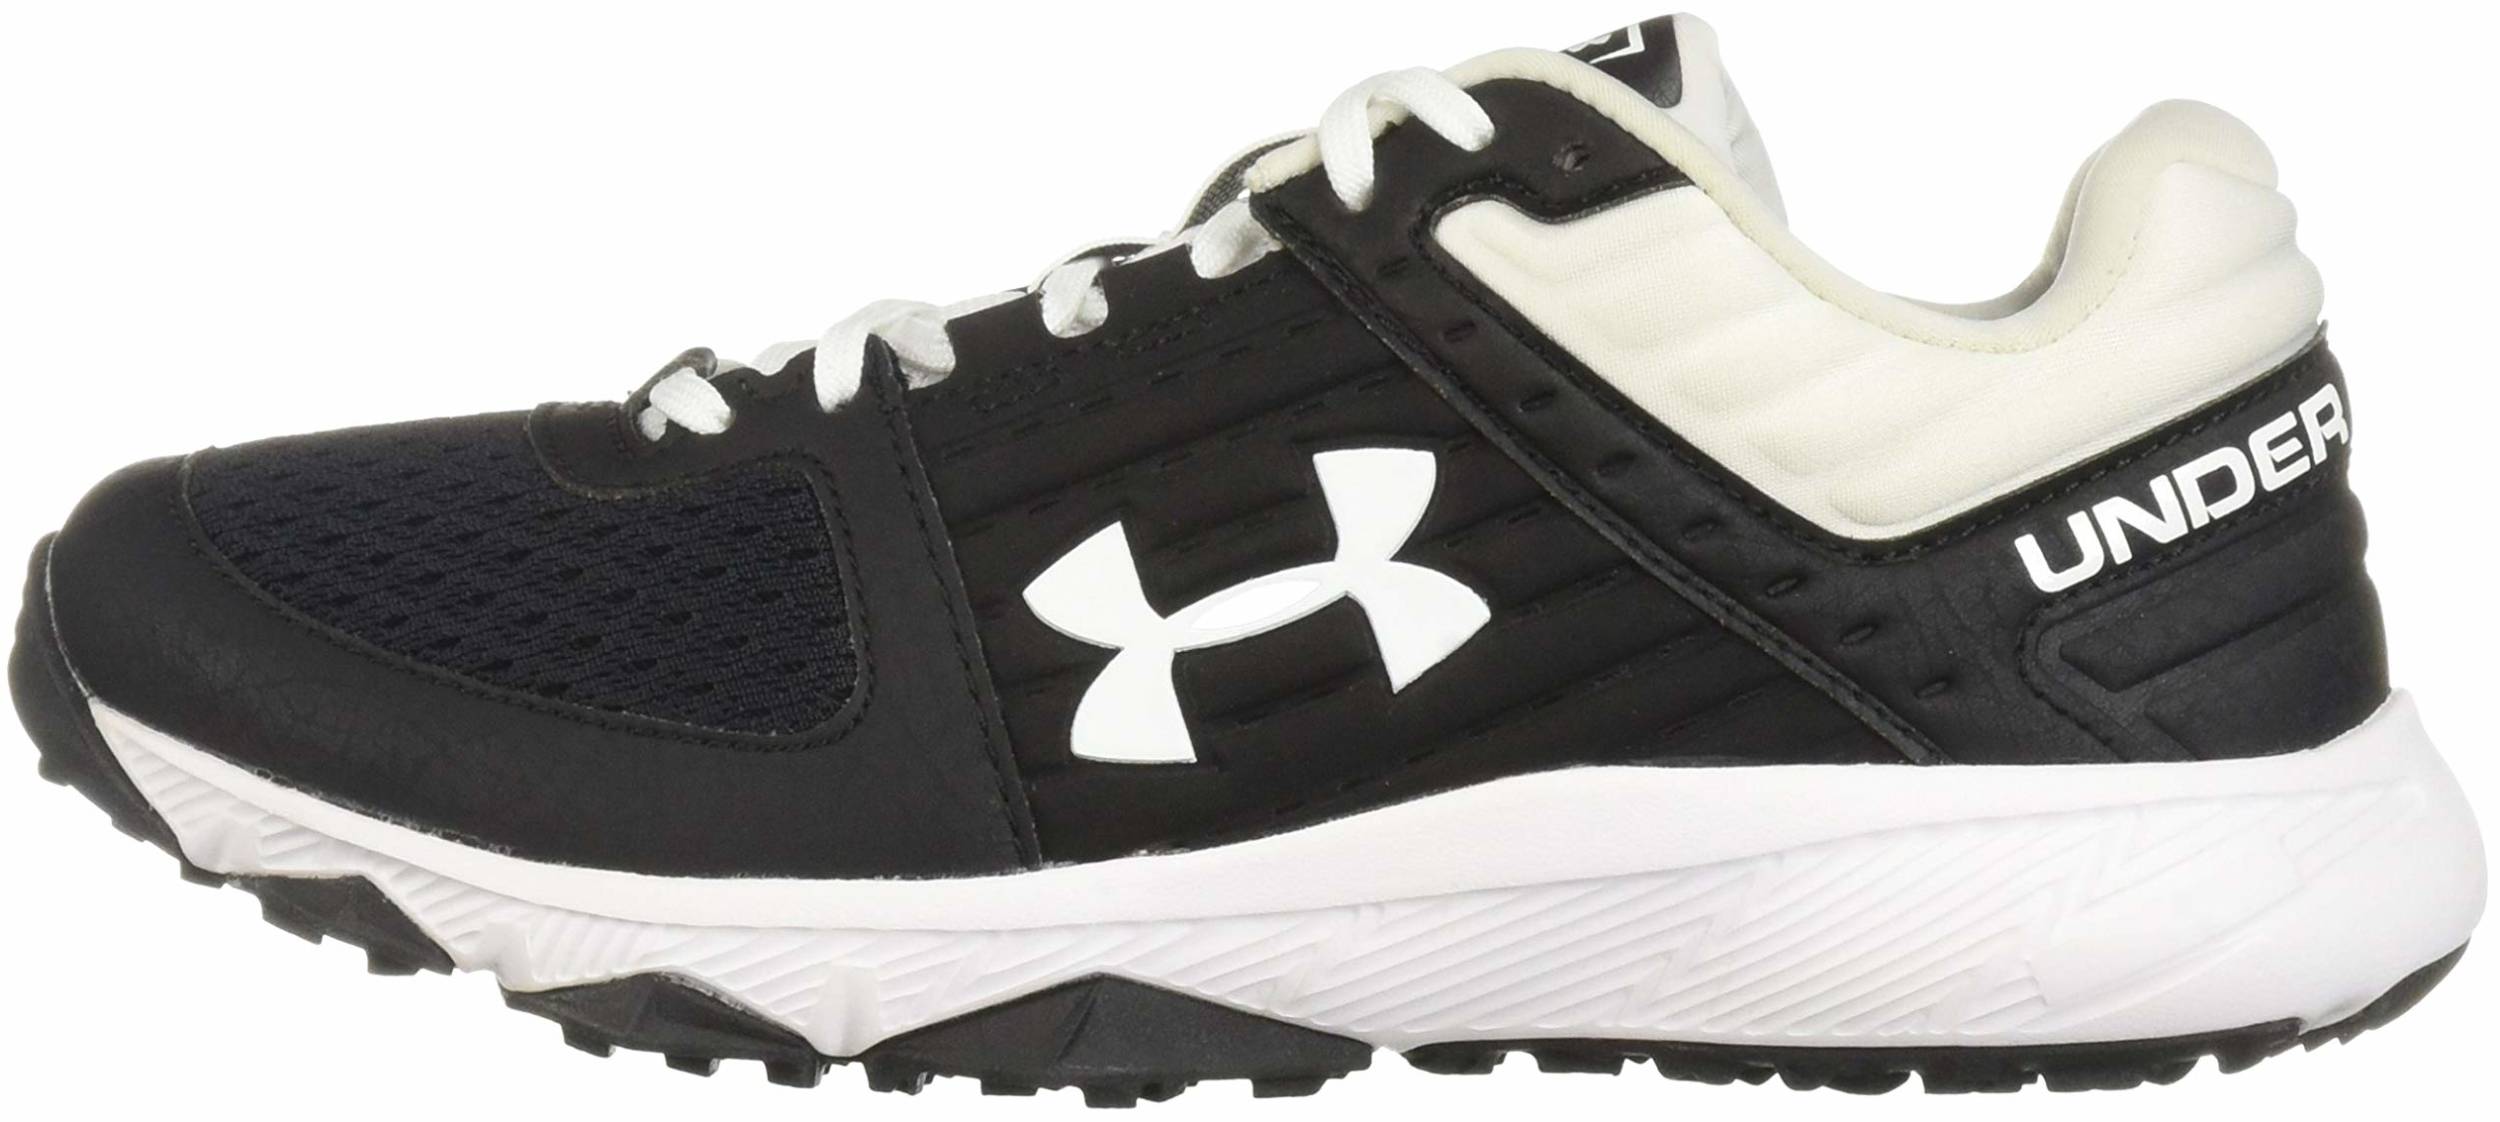 baseball trainer shoes